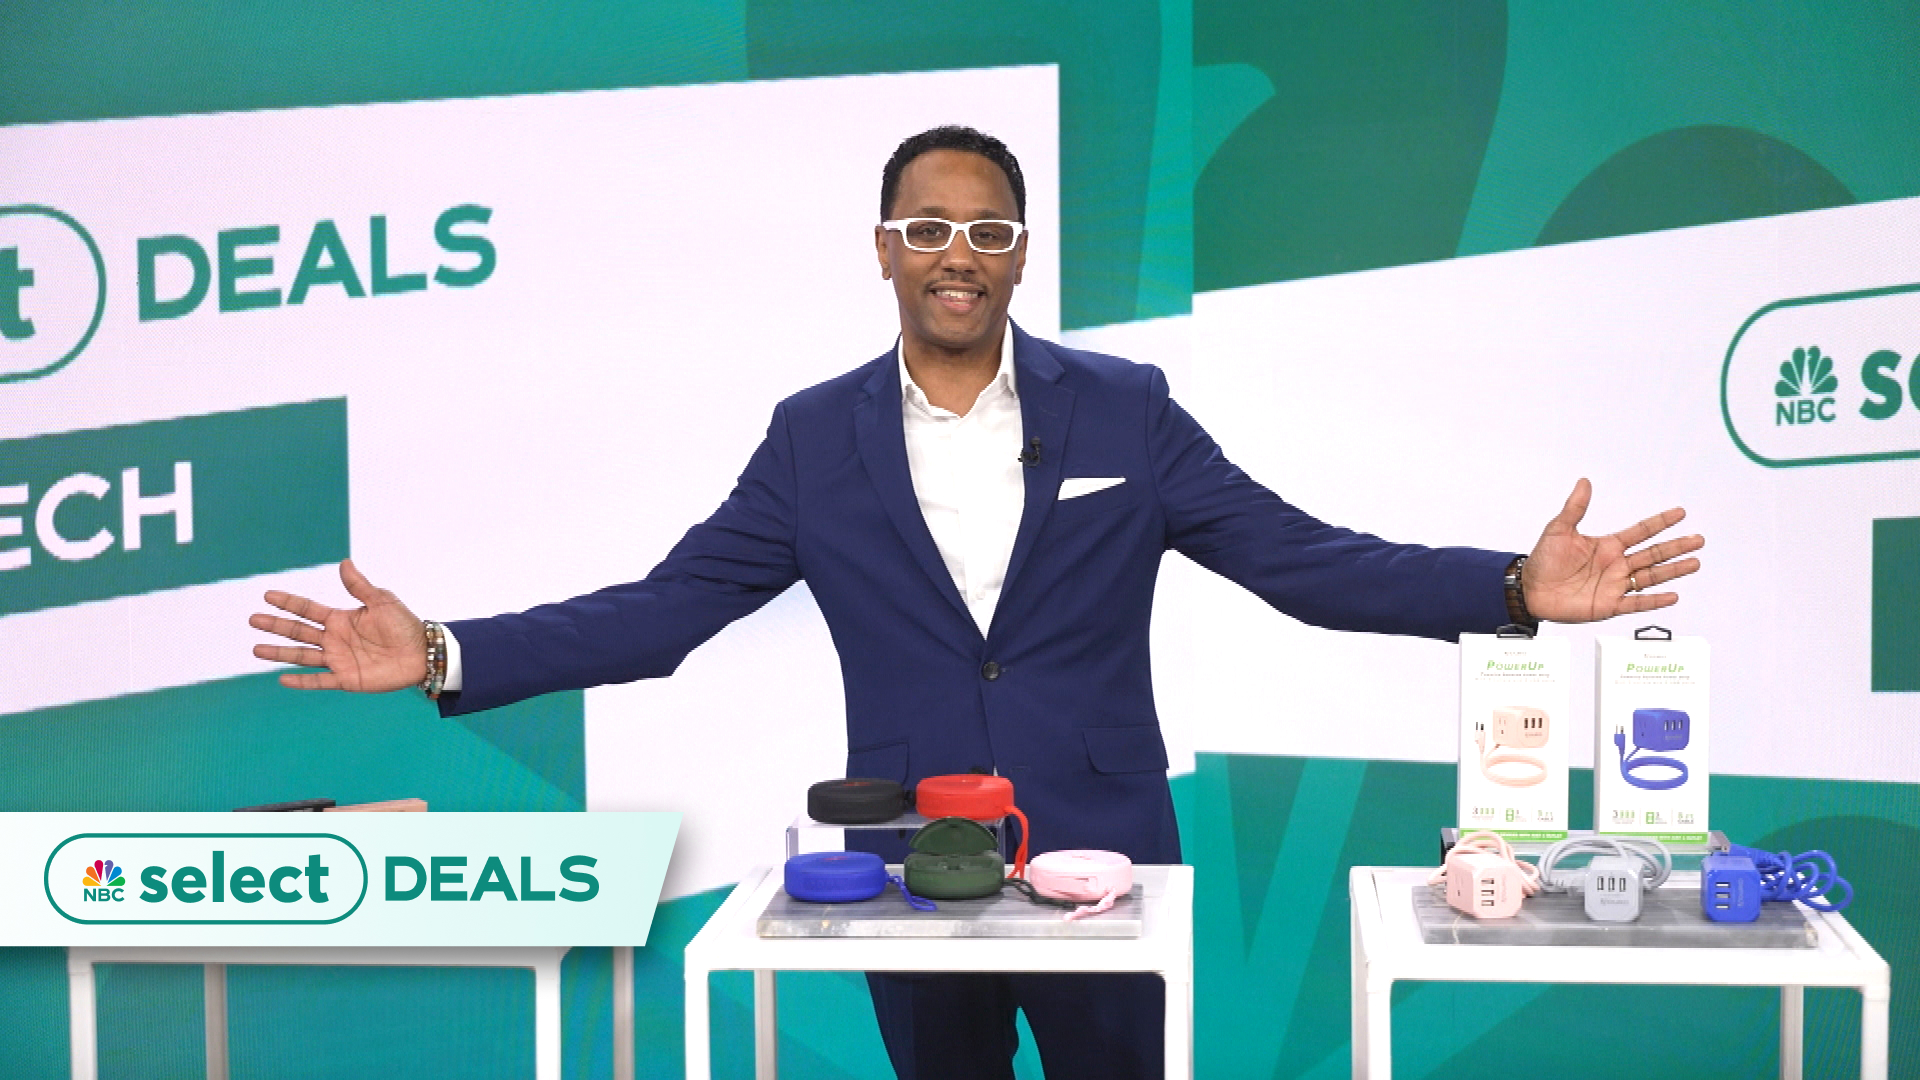 NBC introduces Select Deals for exclusive deals, discounts